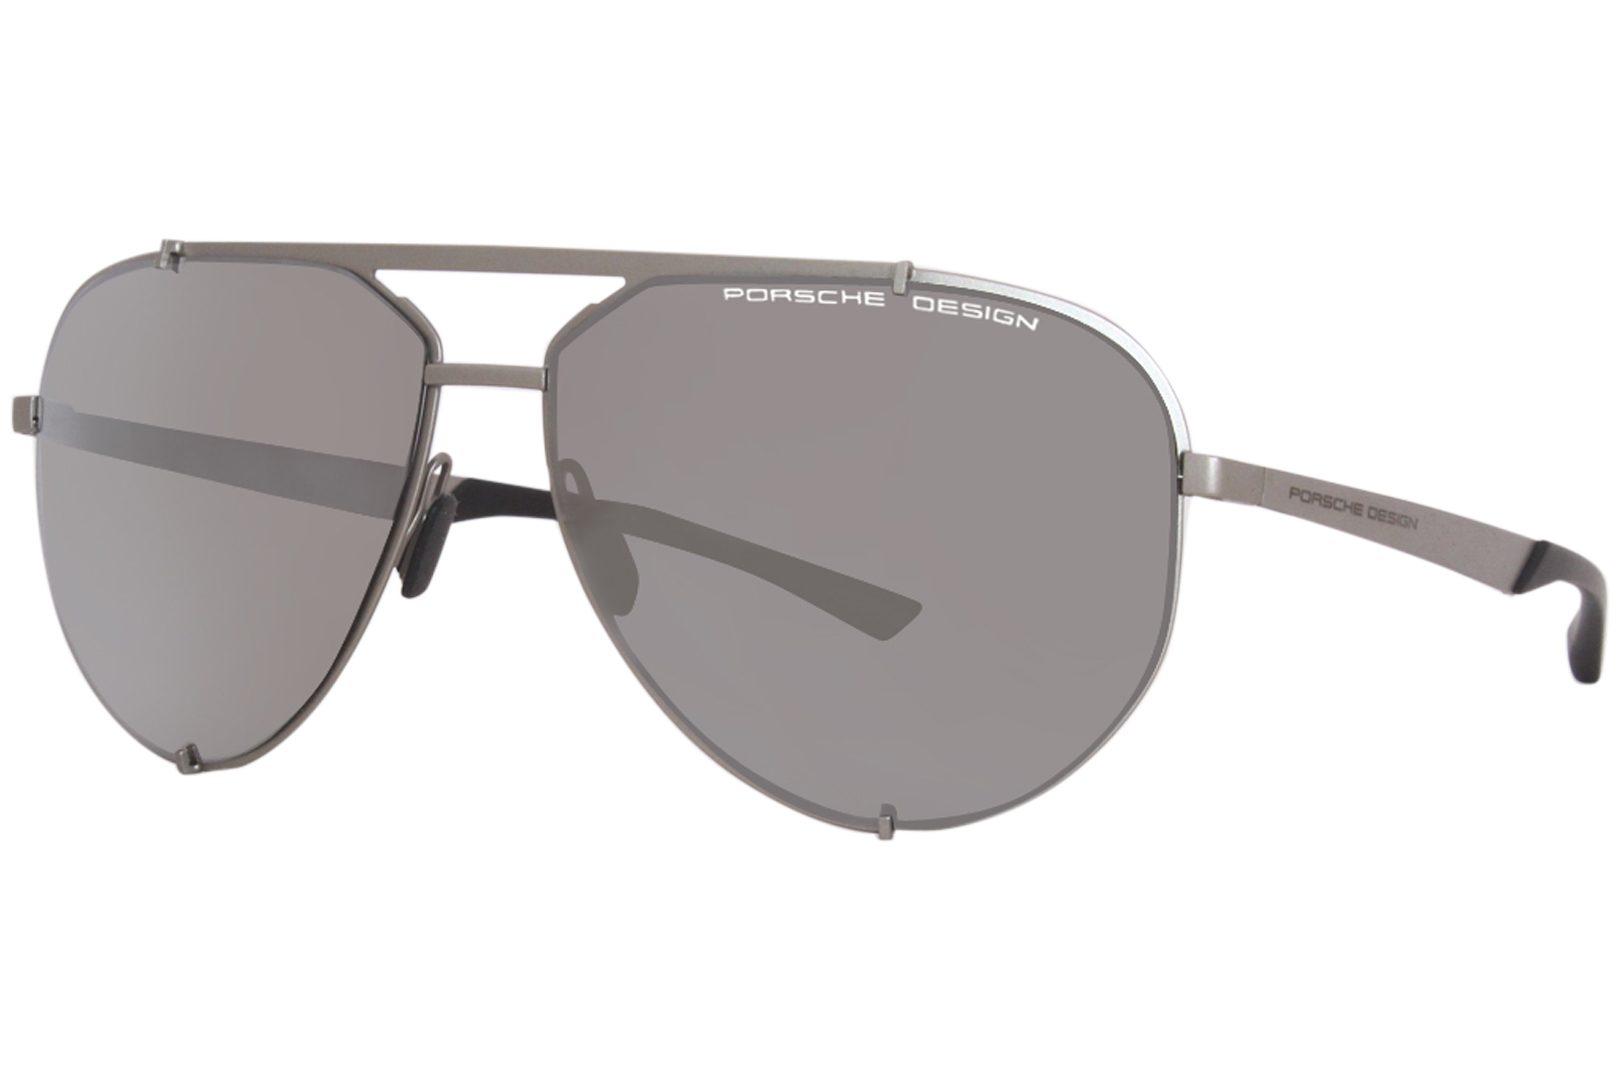 Classic Metal Aviator Sunglasses For Men Women Colored Mirror Lens 57mm